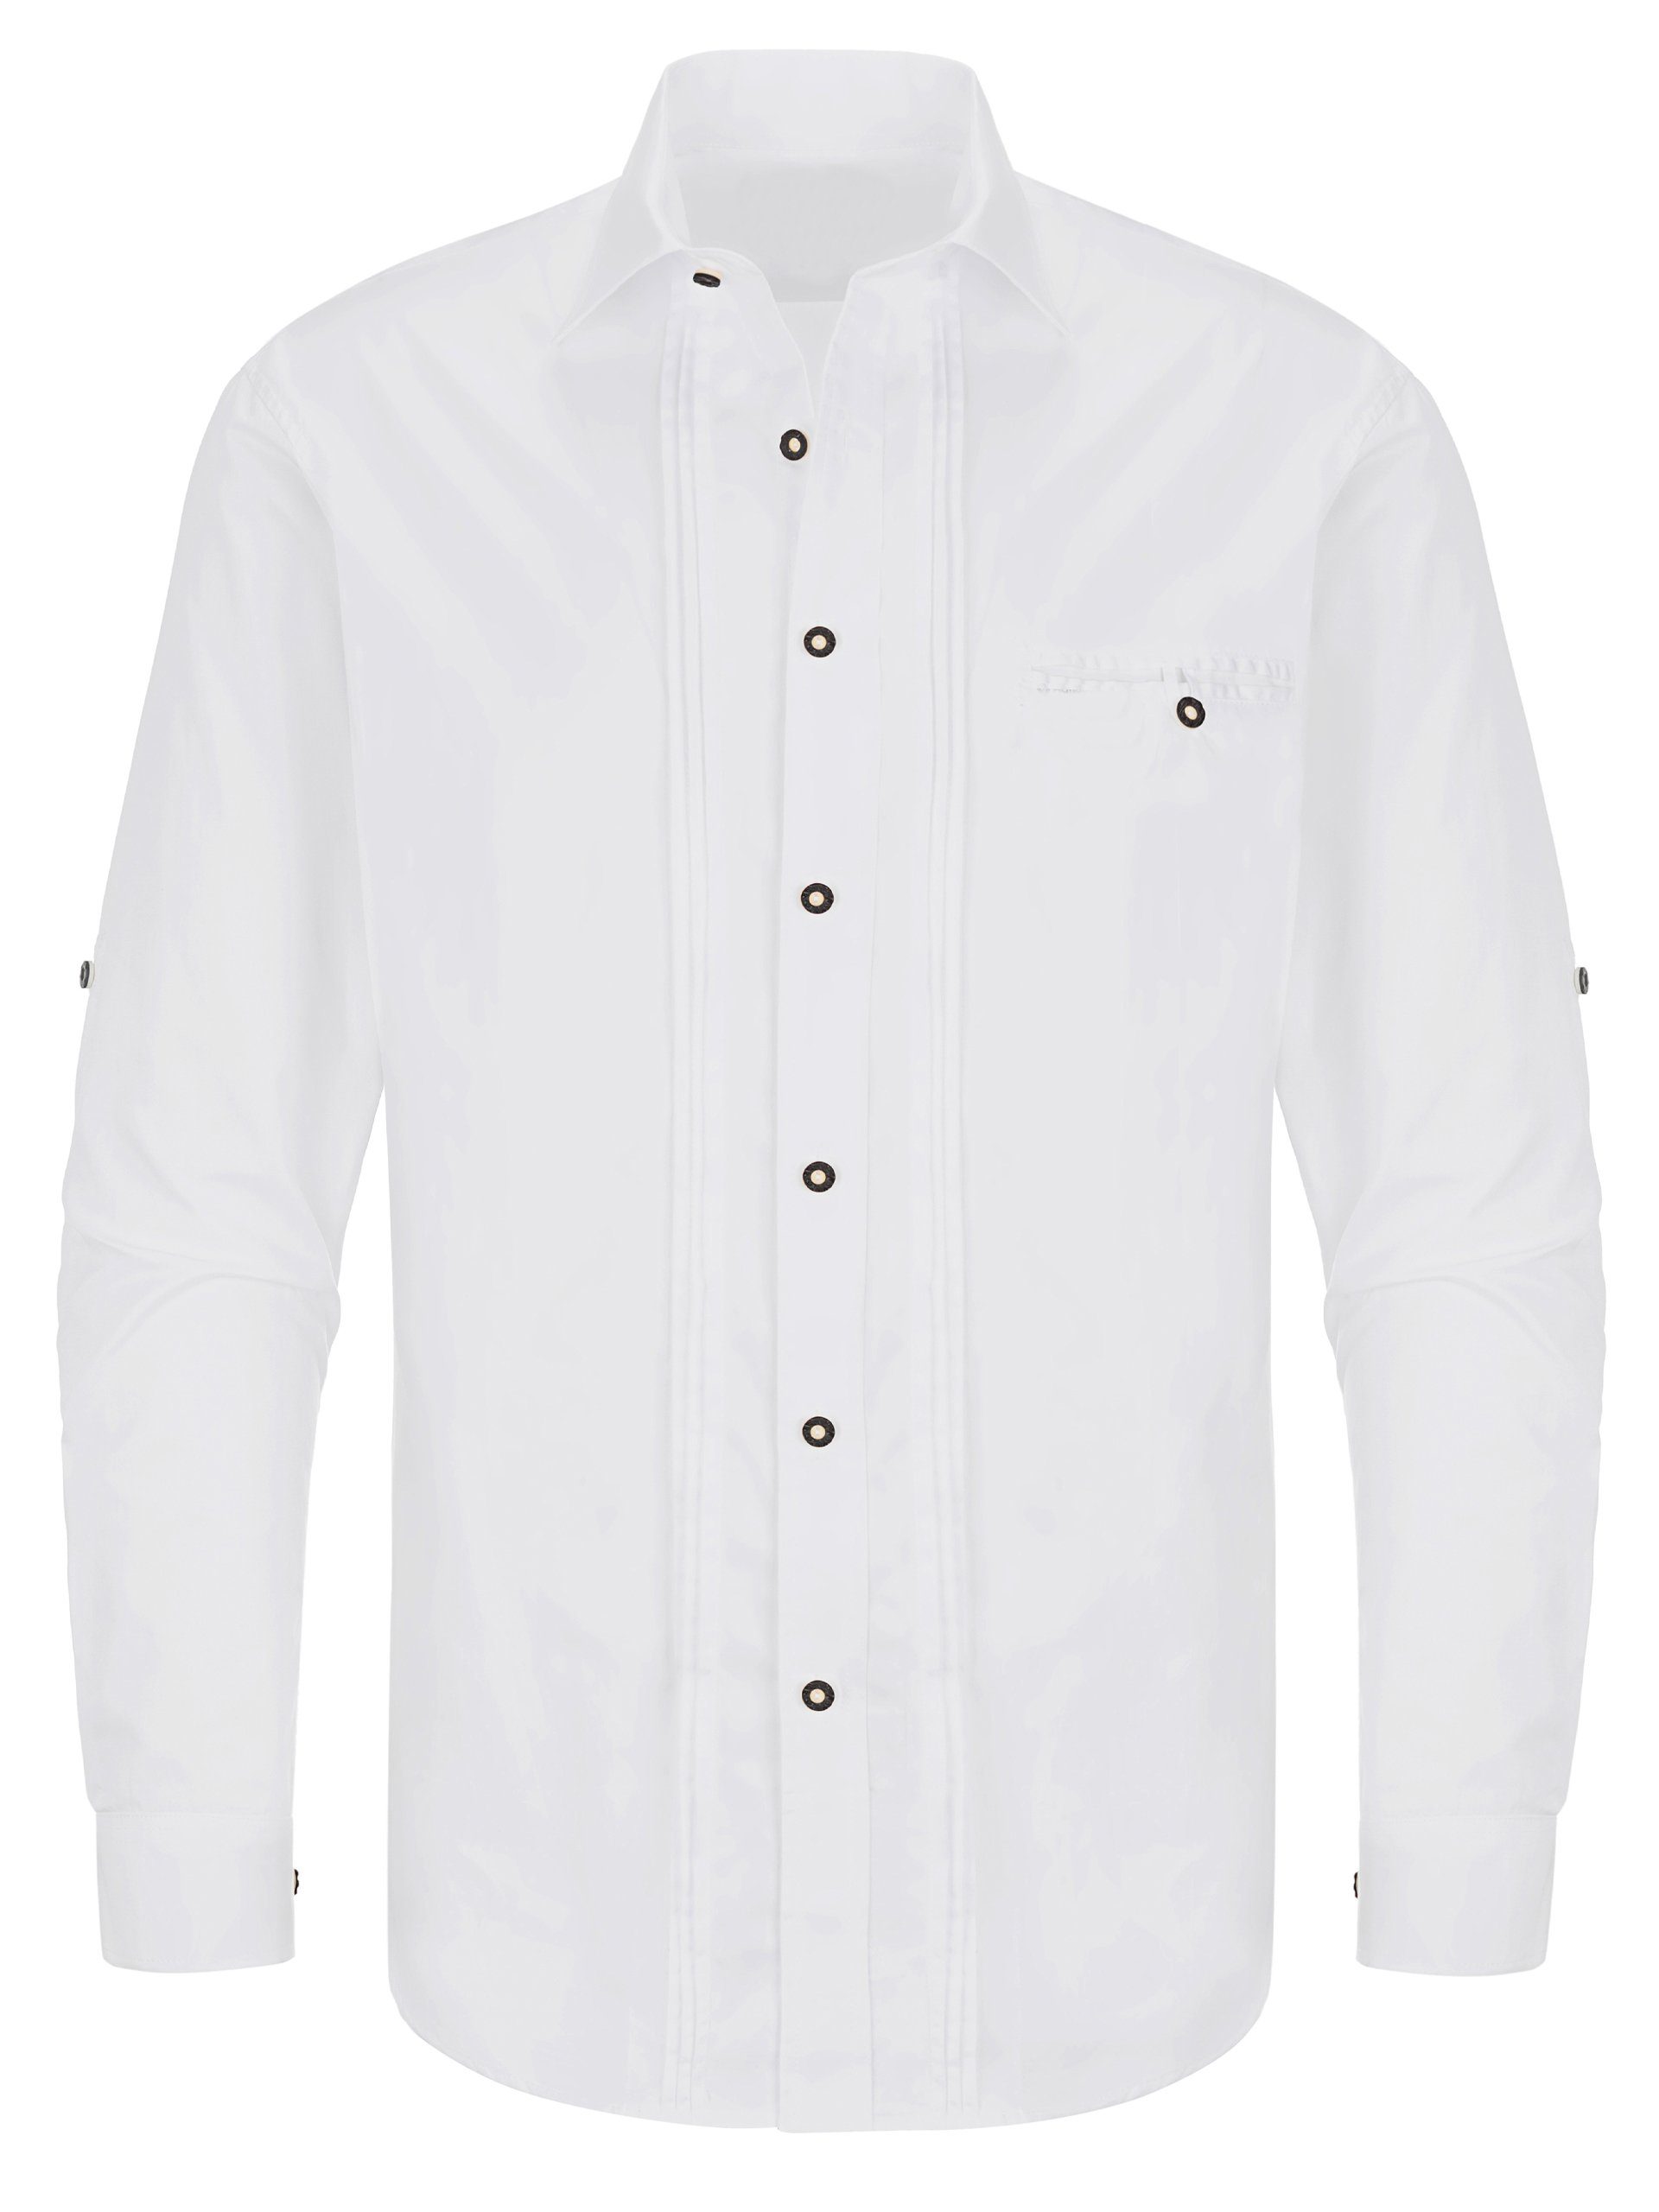 FUCHS Trachtenhemd Landhaushemd Laurentius weiß | Trachtenhemden